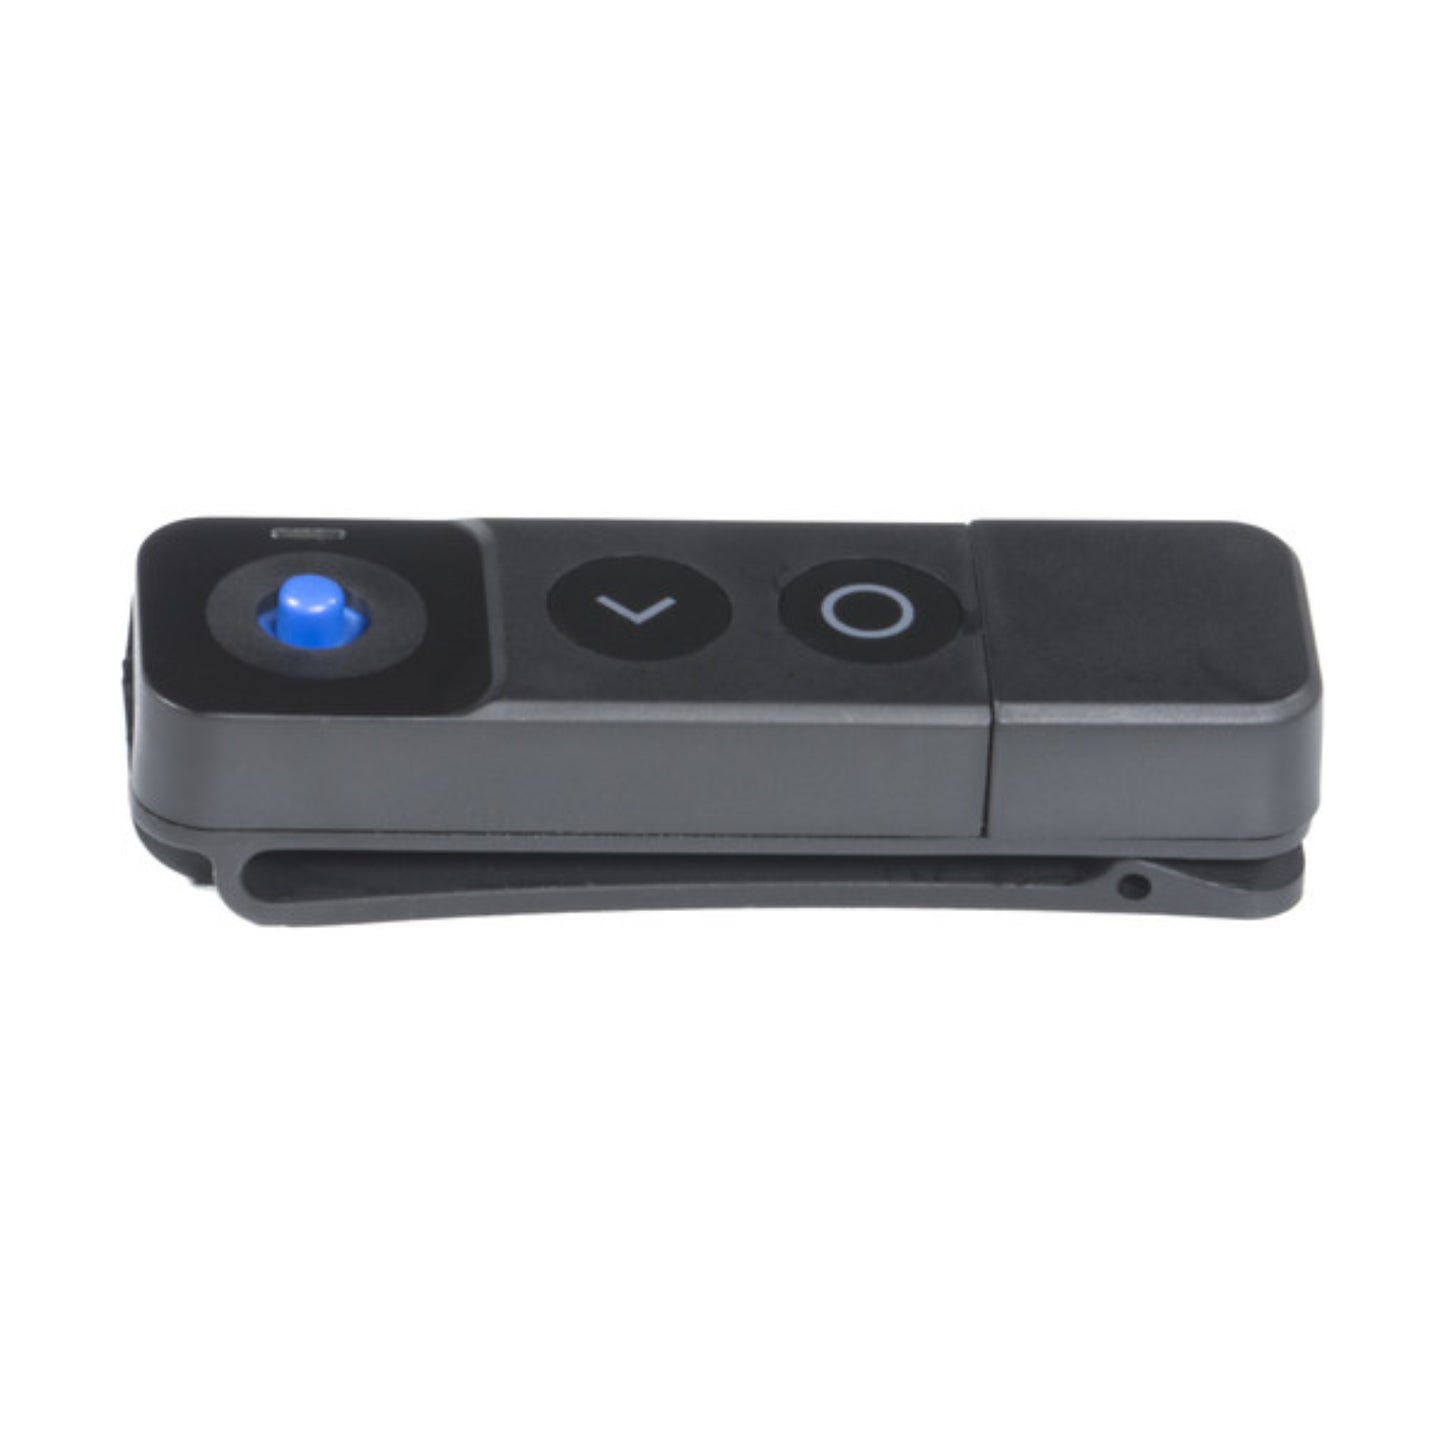 Buy SmallHD Wireless Remote For 500/700 Series Monitors | Topic Store